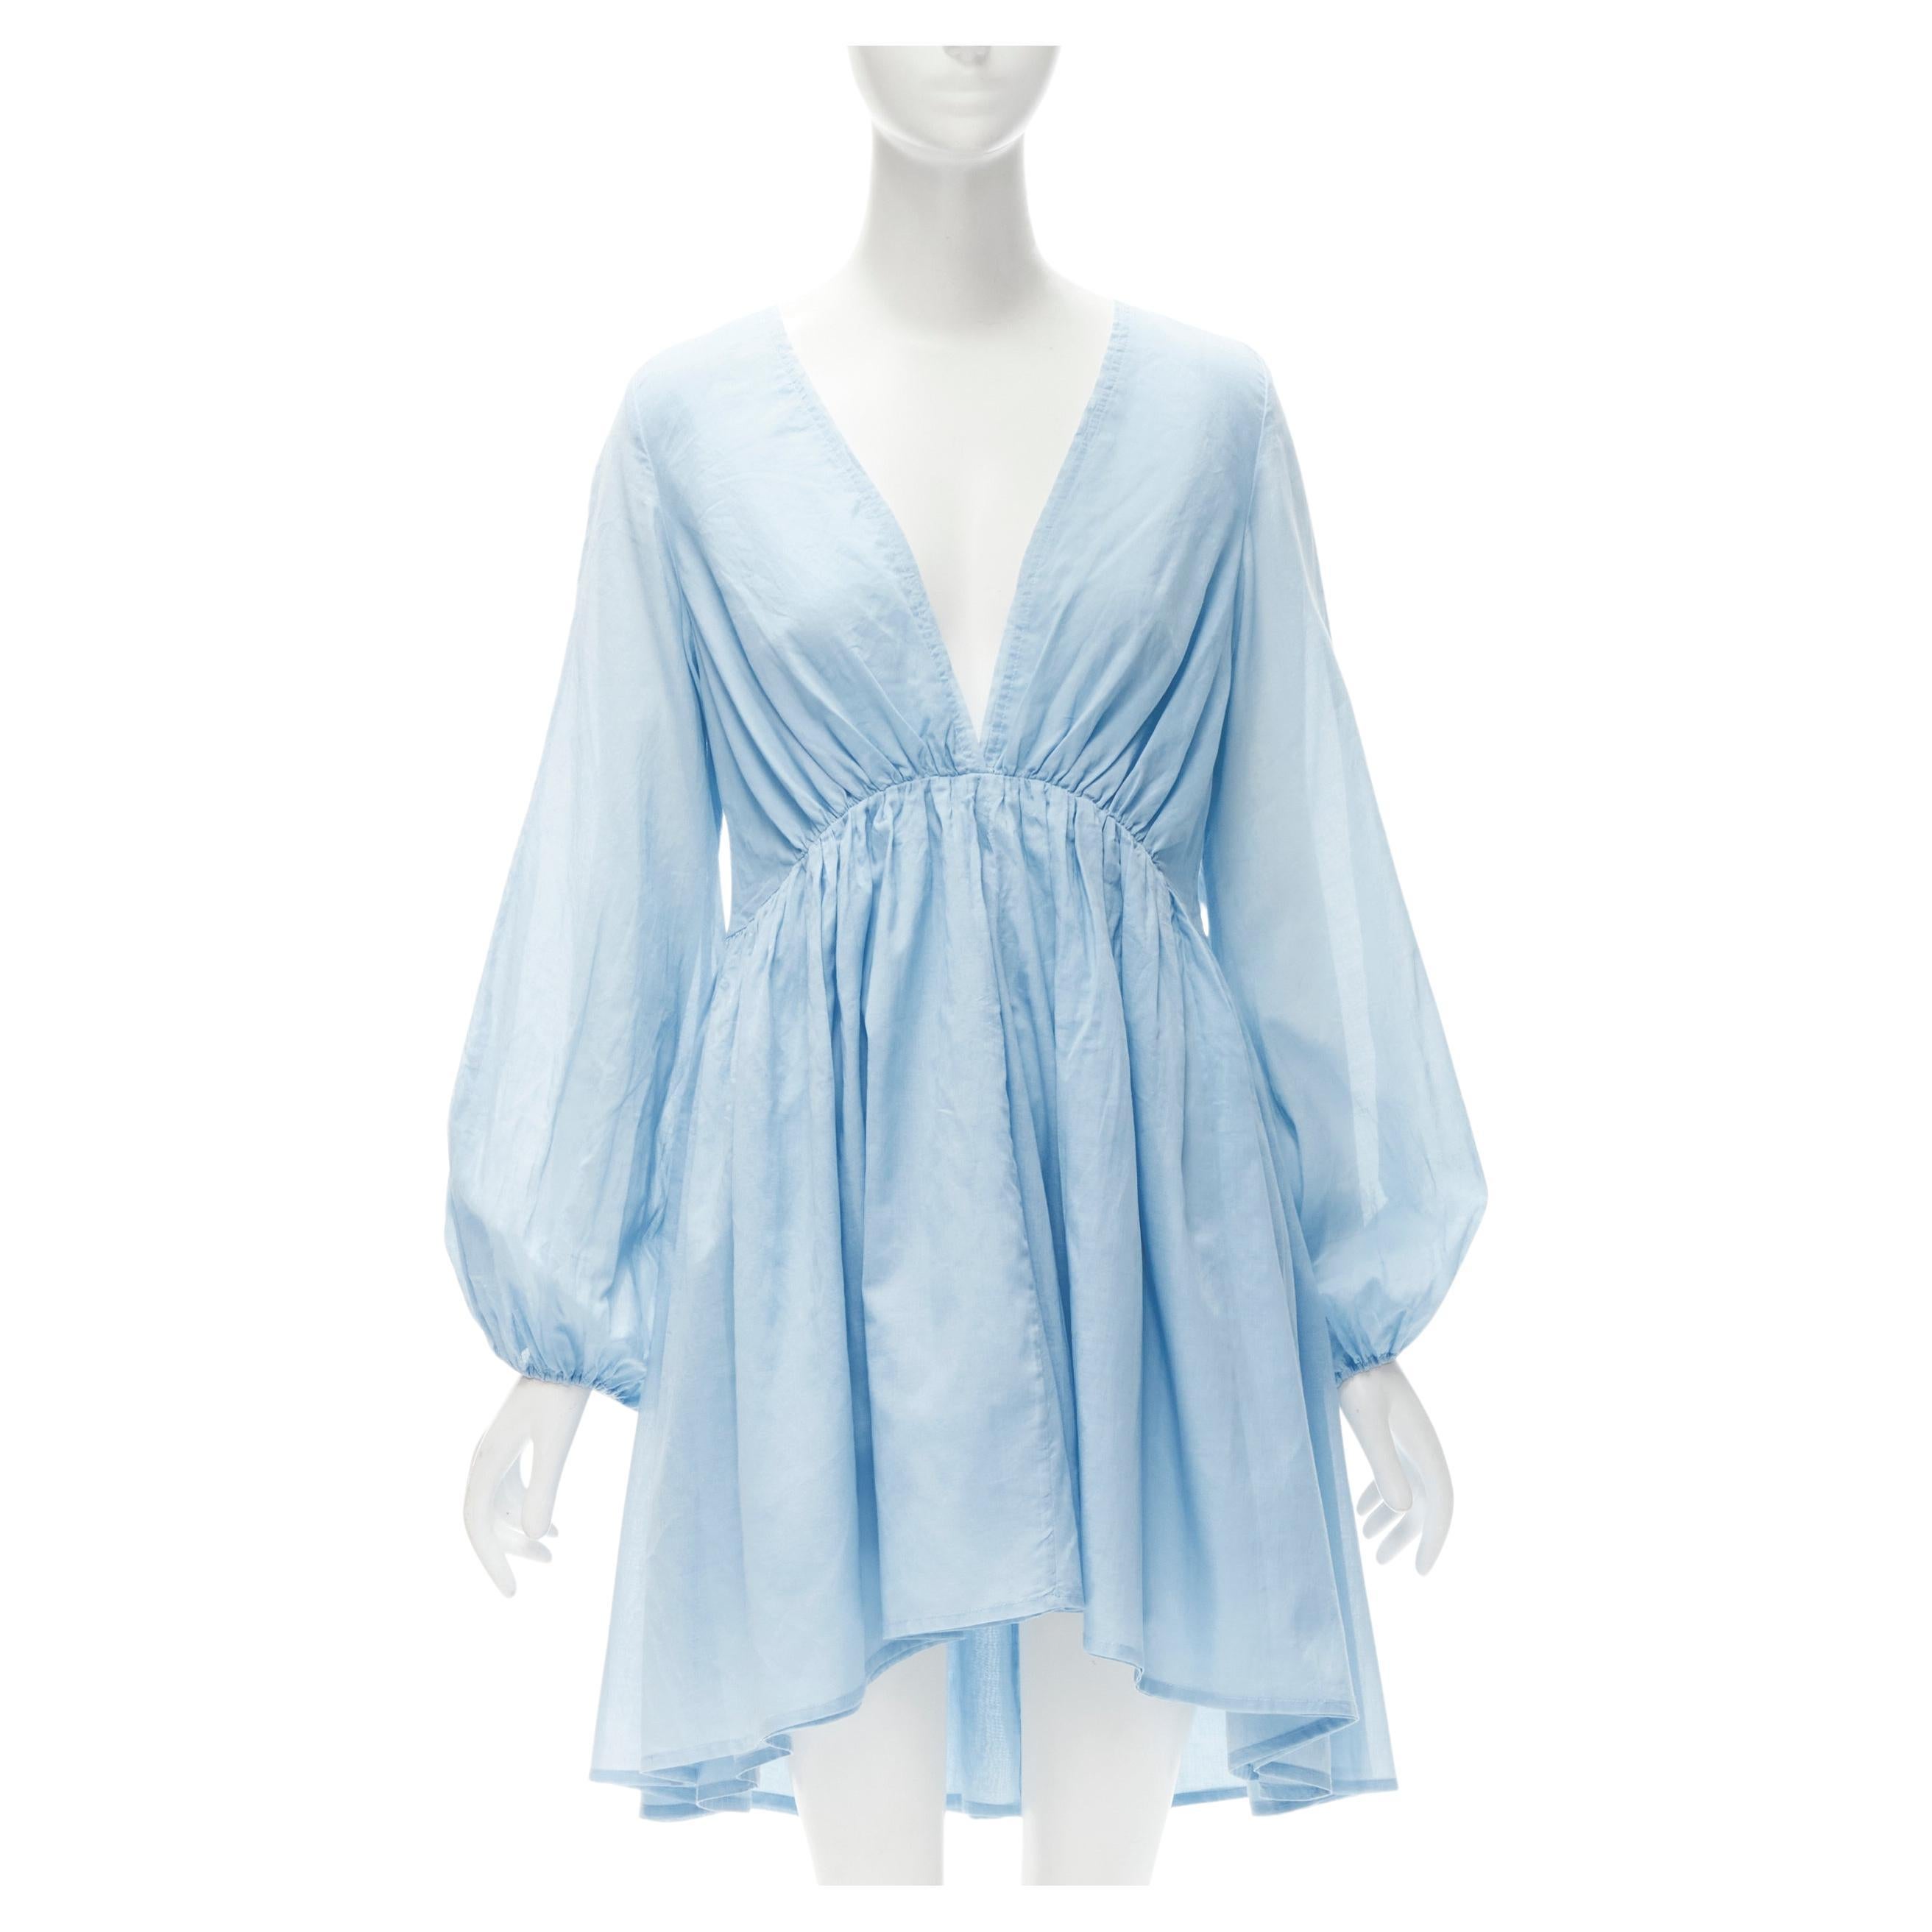 KALITA 100% cotton sky blue plunge neck bell sleeve short dress S/M For Sale